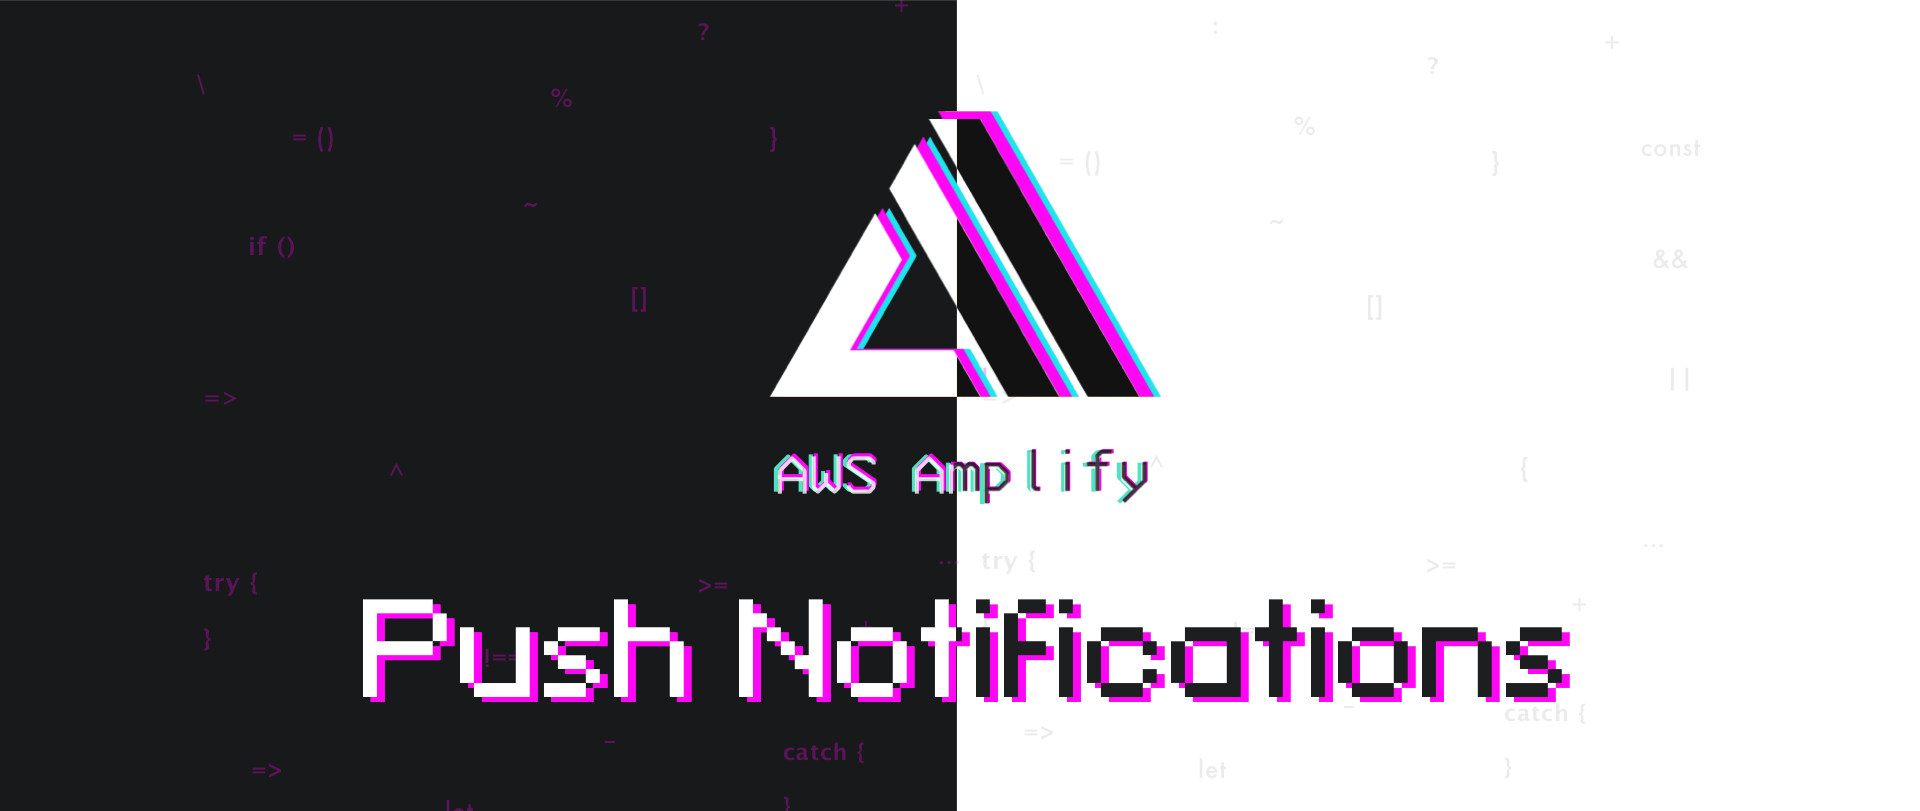 Push Notifications